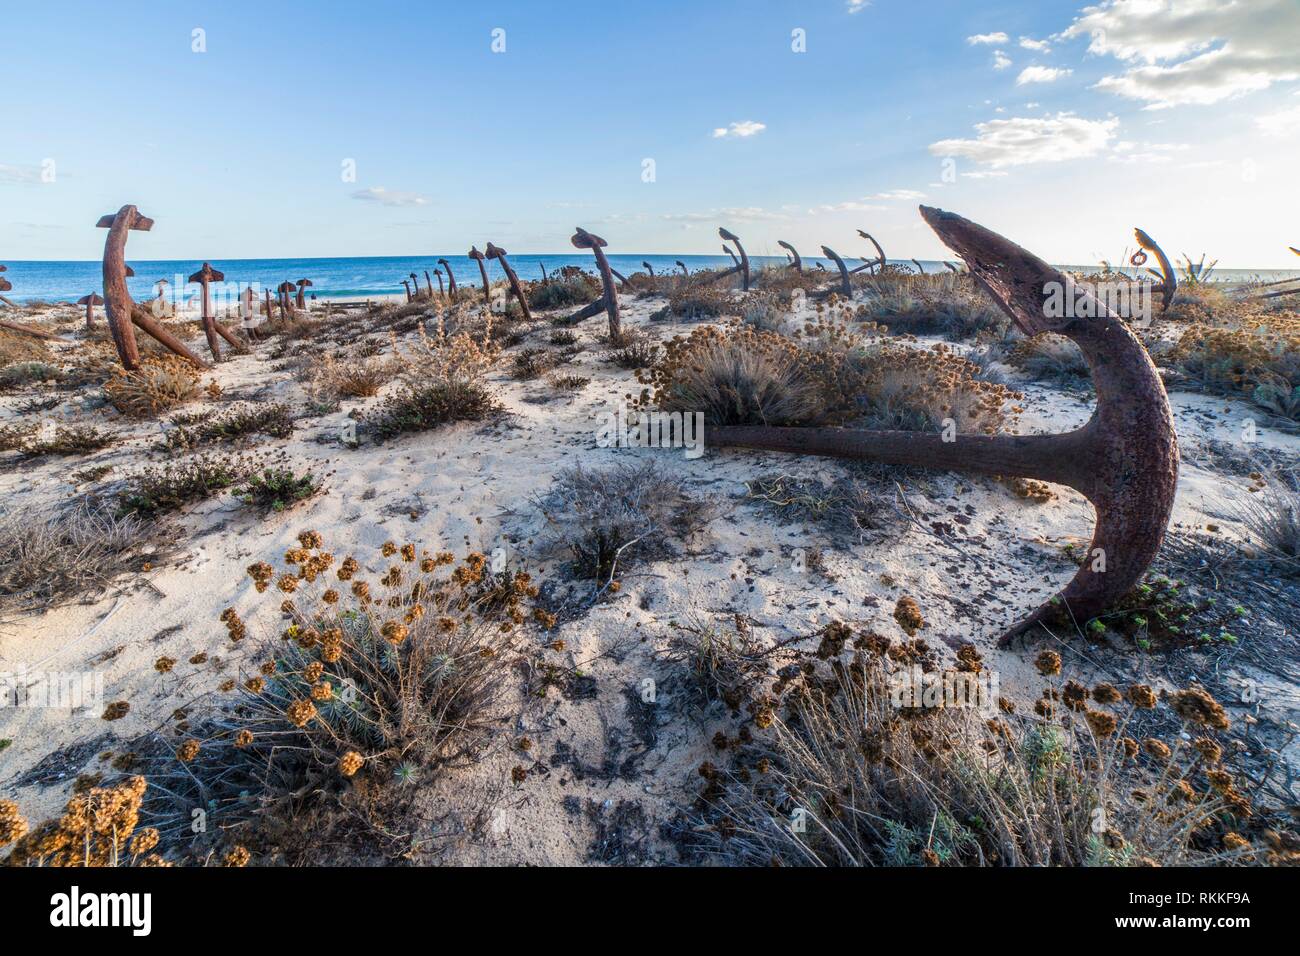 Cemetery of Anchors. Memorial monument to dead fishermen of tuna industry in Portugal. Baril beach, Santa Luzia, Algarve. Stock Photo